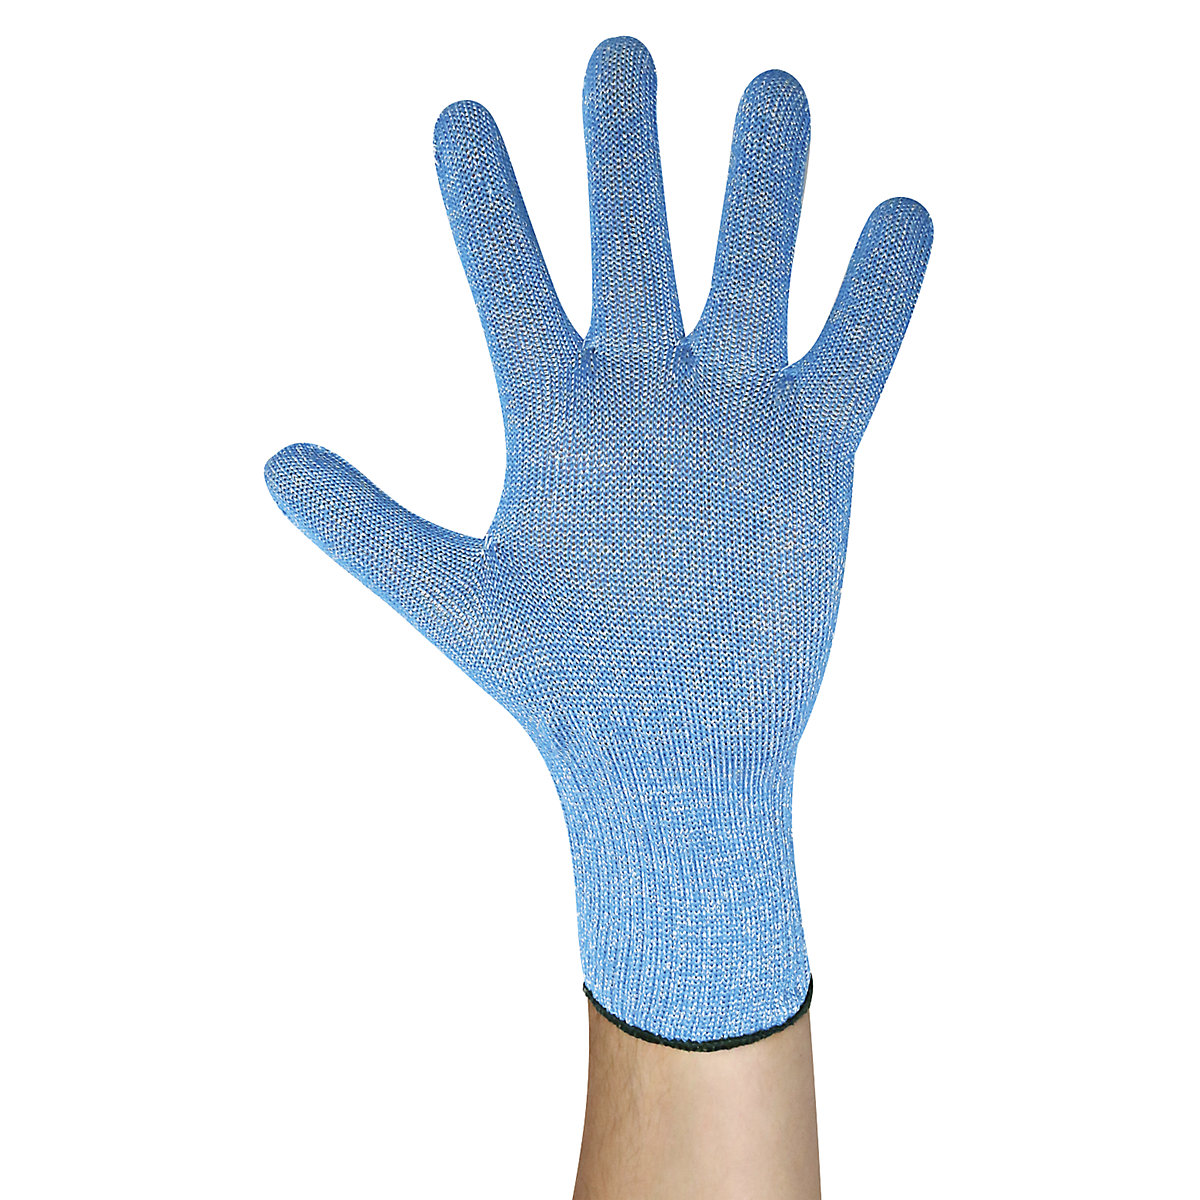 Cut protection gloves, food-safe